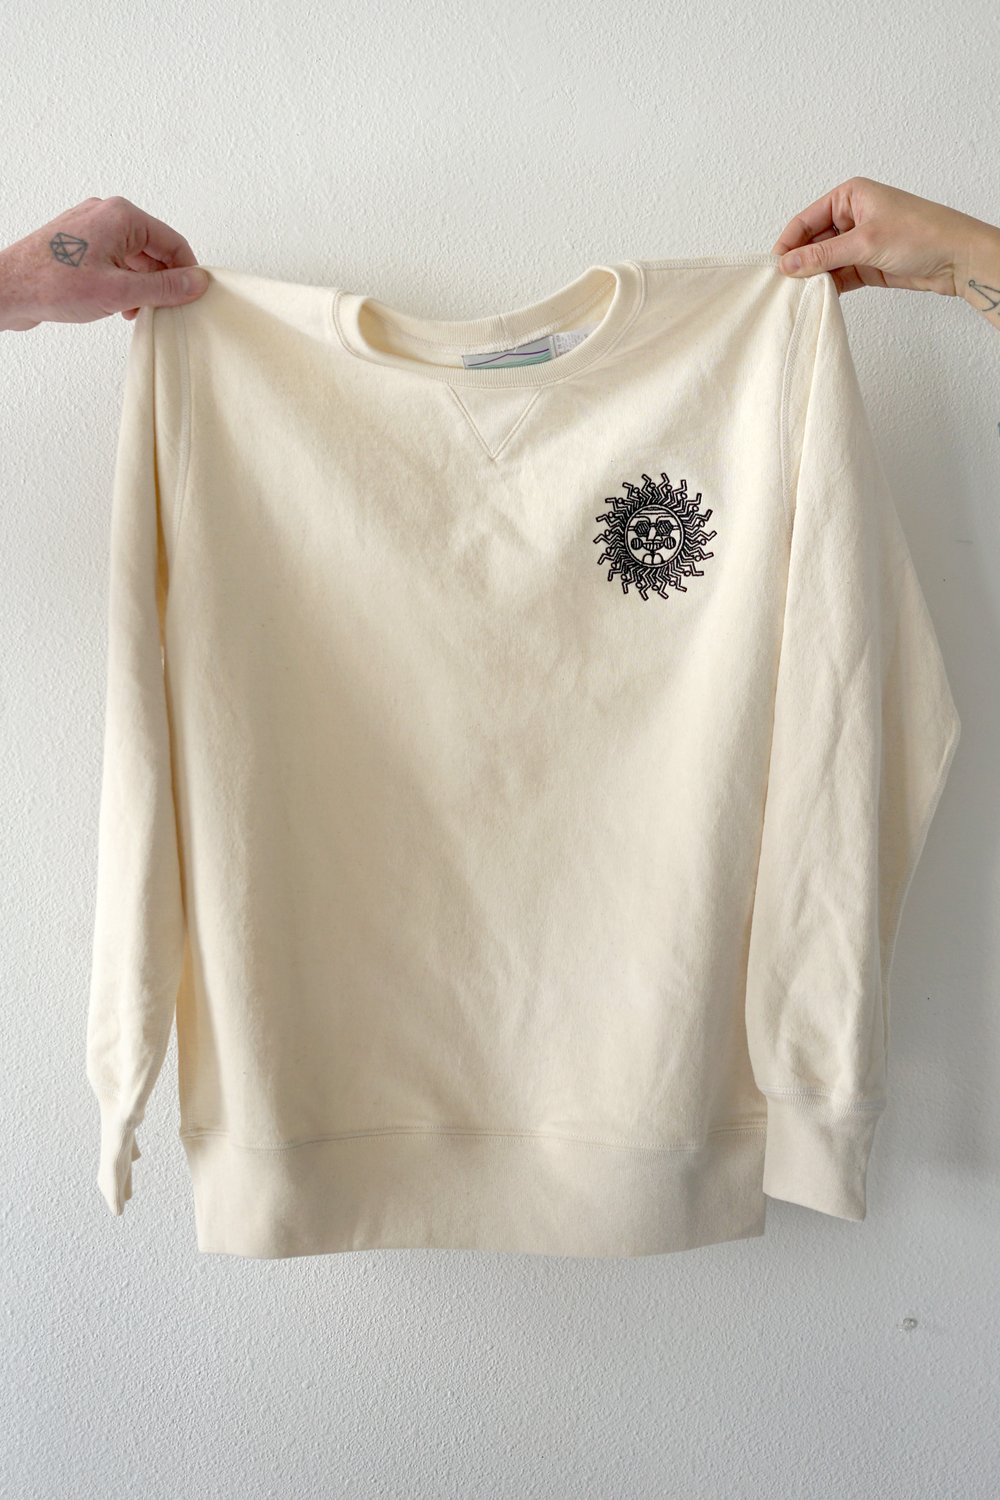 Image of Sun Sweatshirt in Off-white